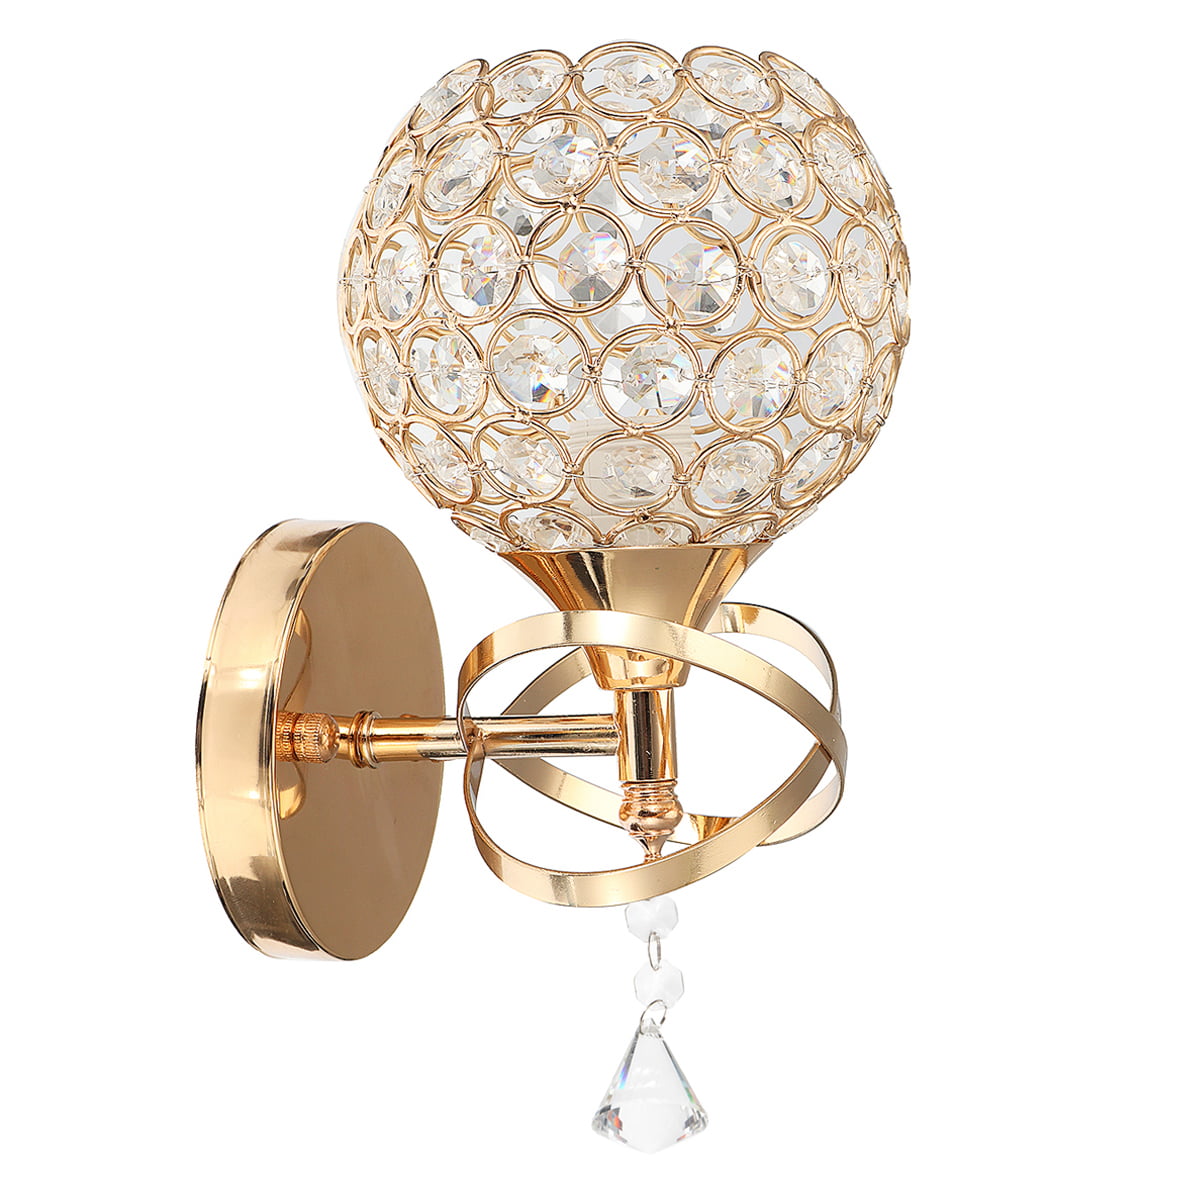 Deluxe Diamond Wall Lamp Crystal Sconce LED Light Bedroom Bathroom Lighting E27 